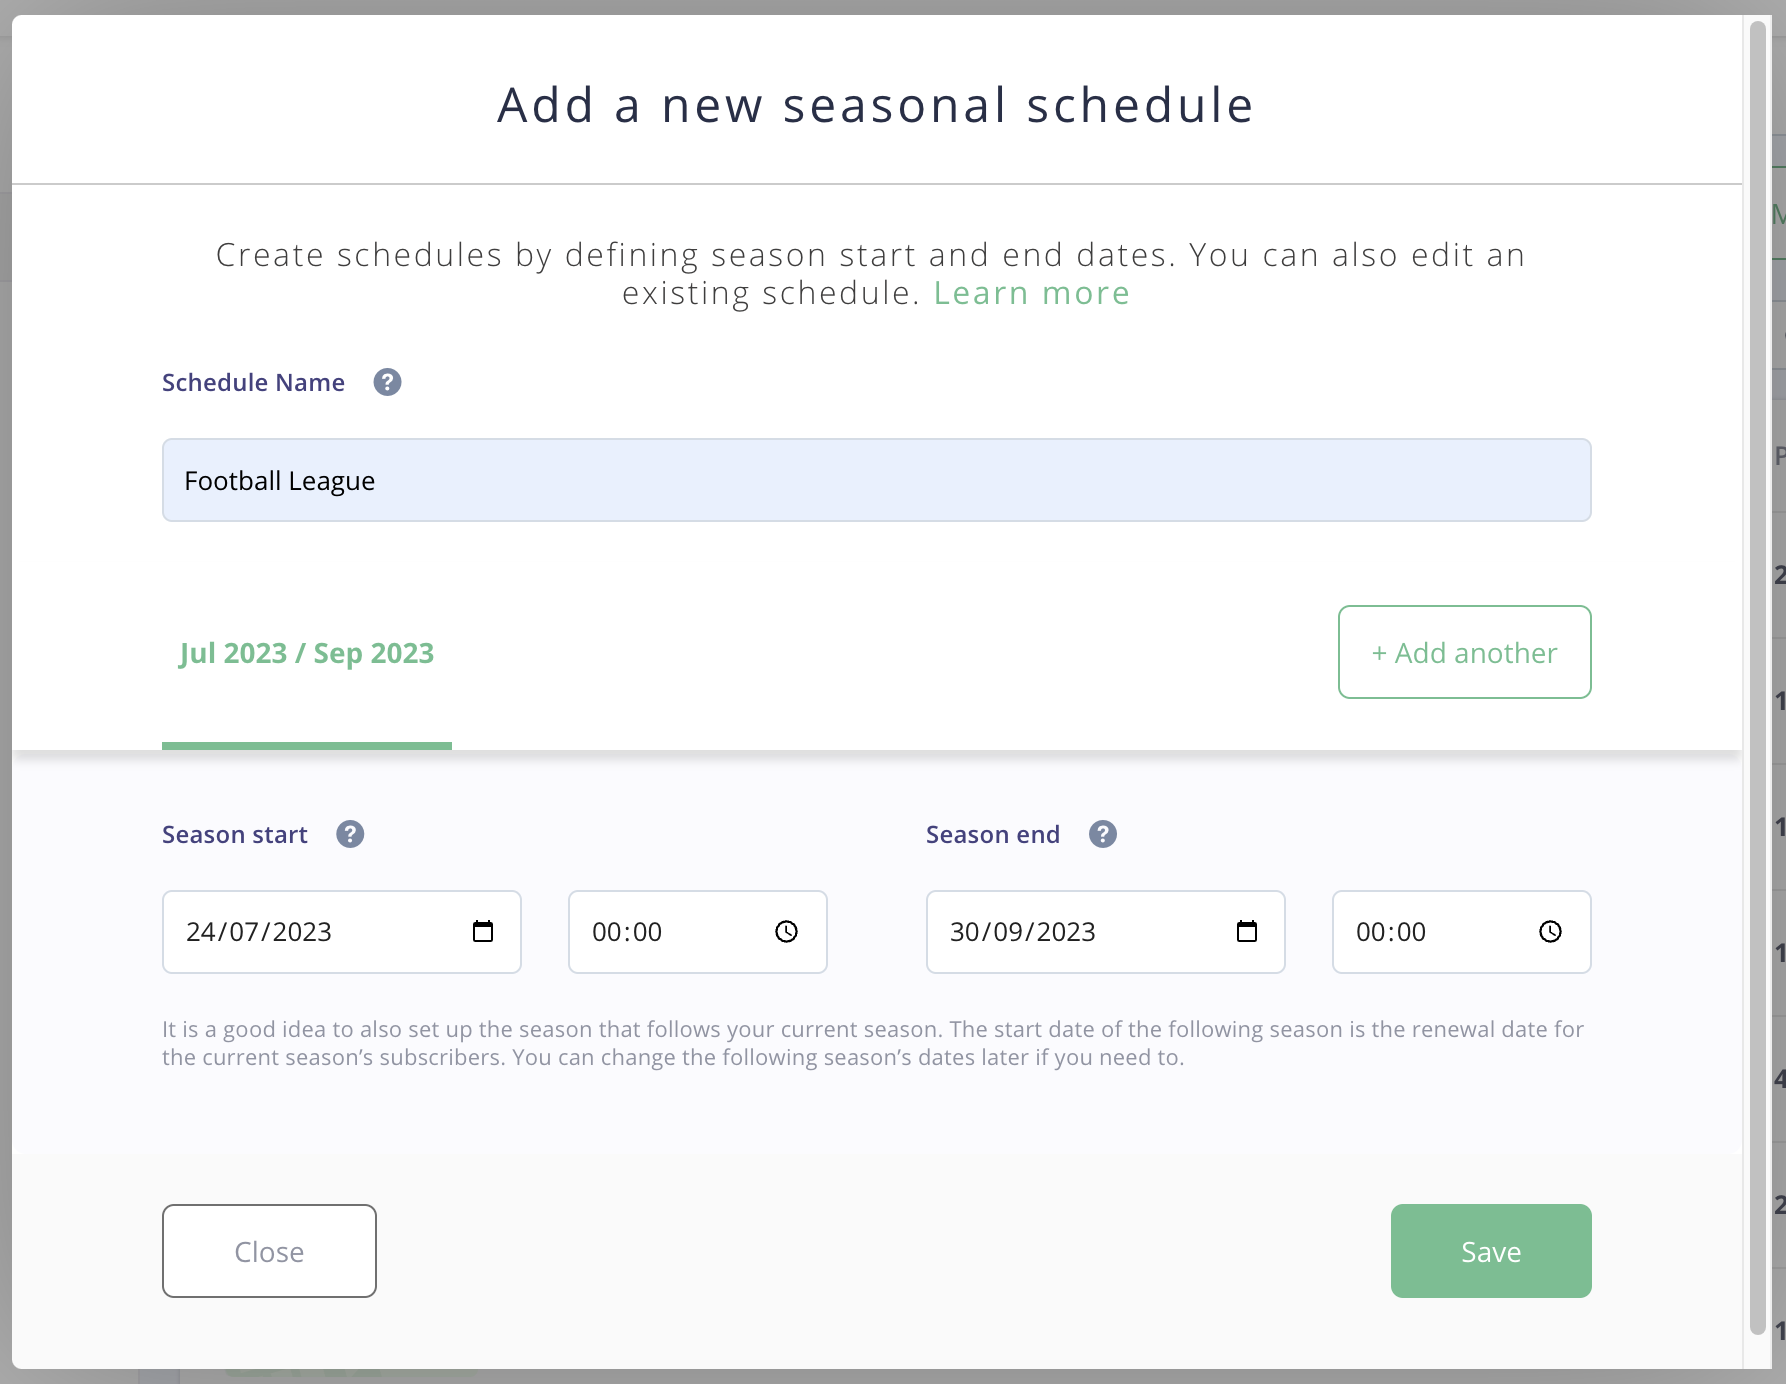 cleeng_add-new-seasonal-schedule_details.png